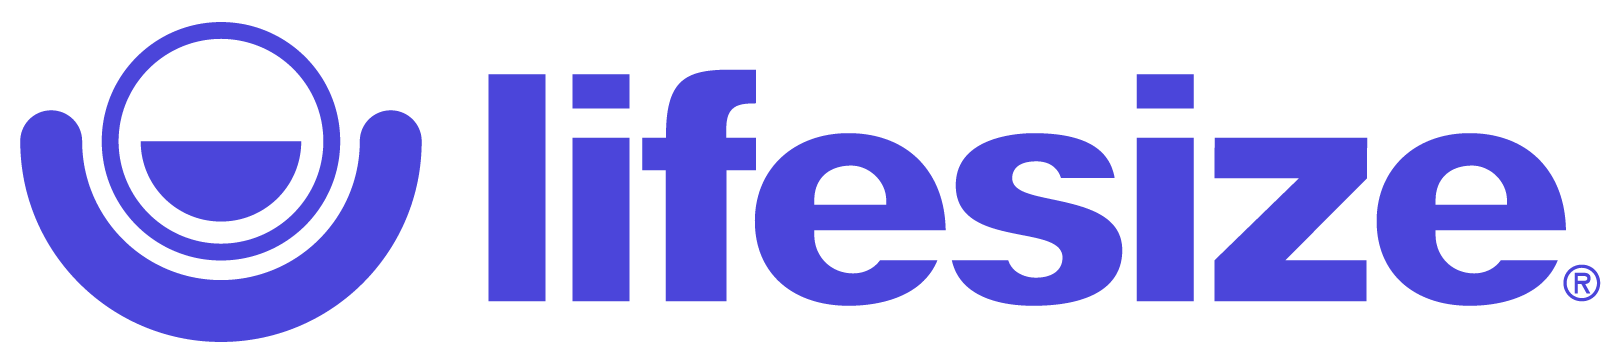 lifesize logo.png